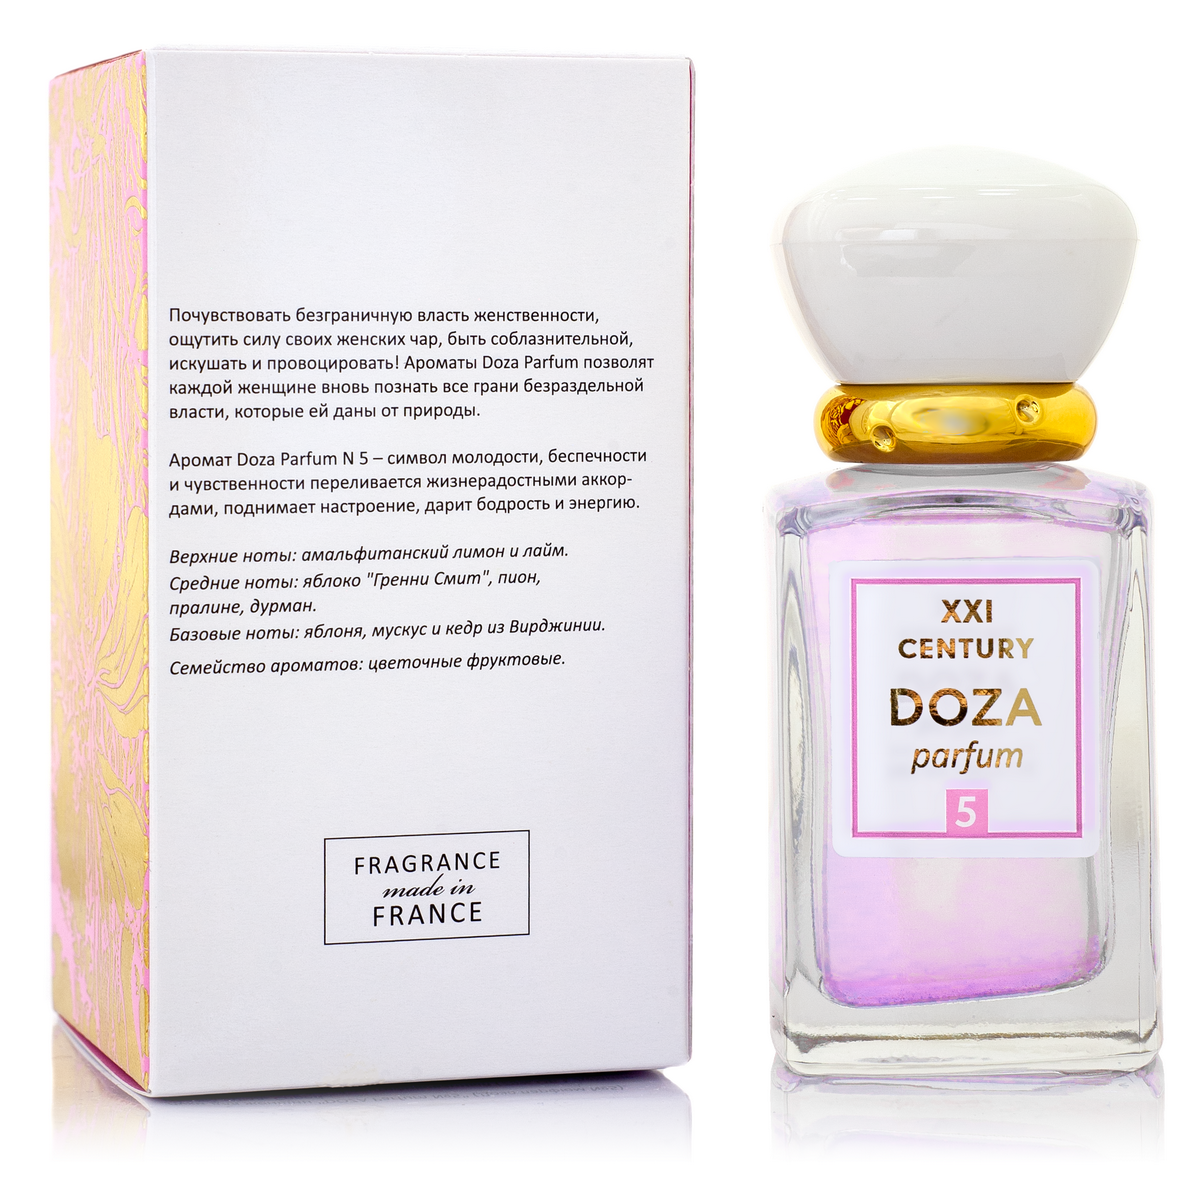 Духи XXI CENTURY DOZA parfum №5 50 мл - фото 3